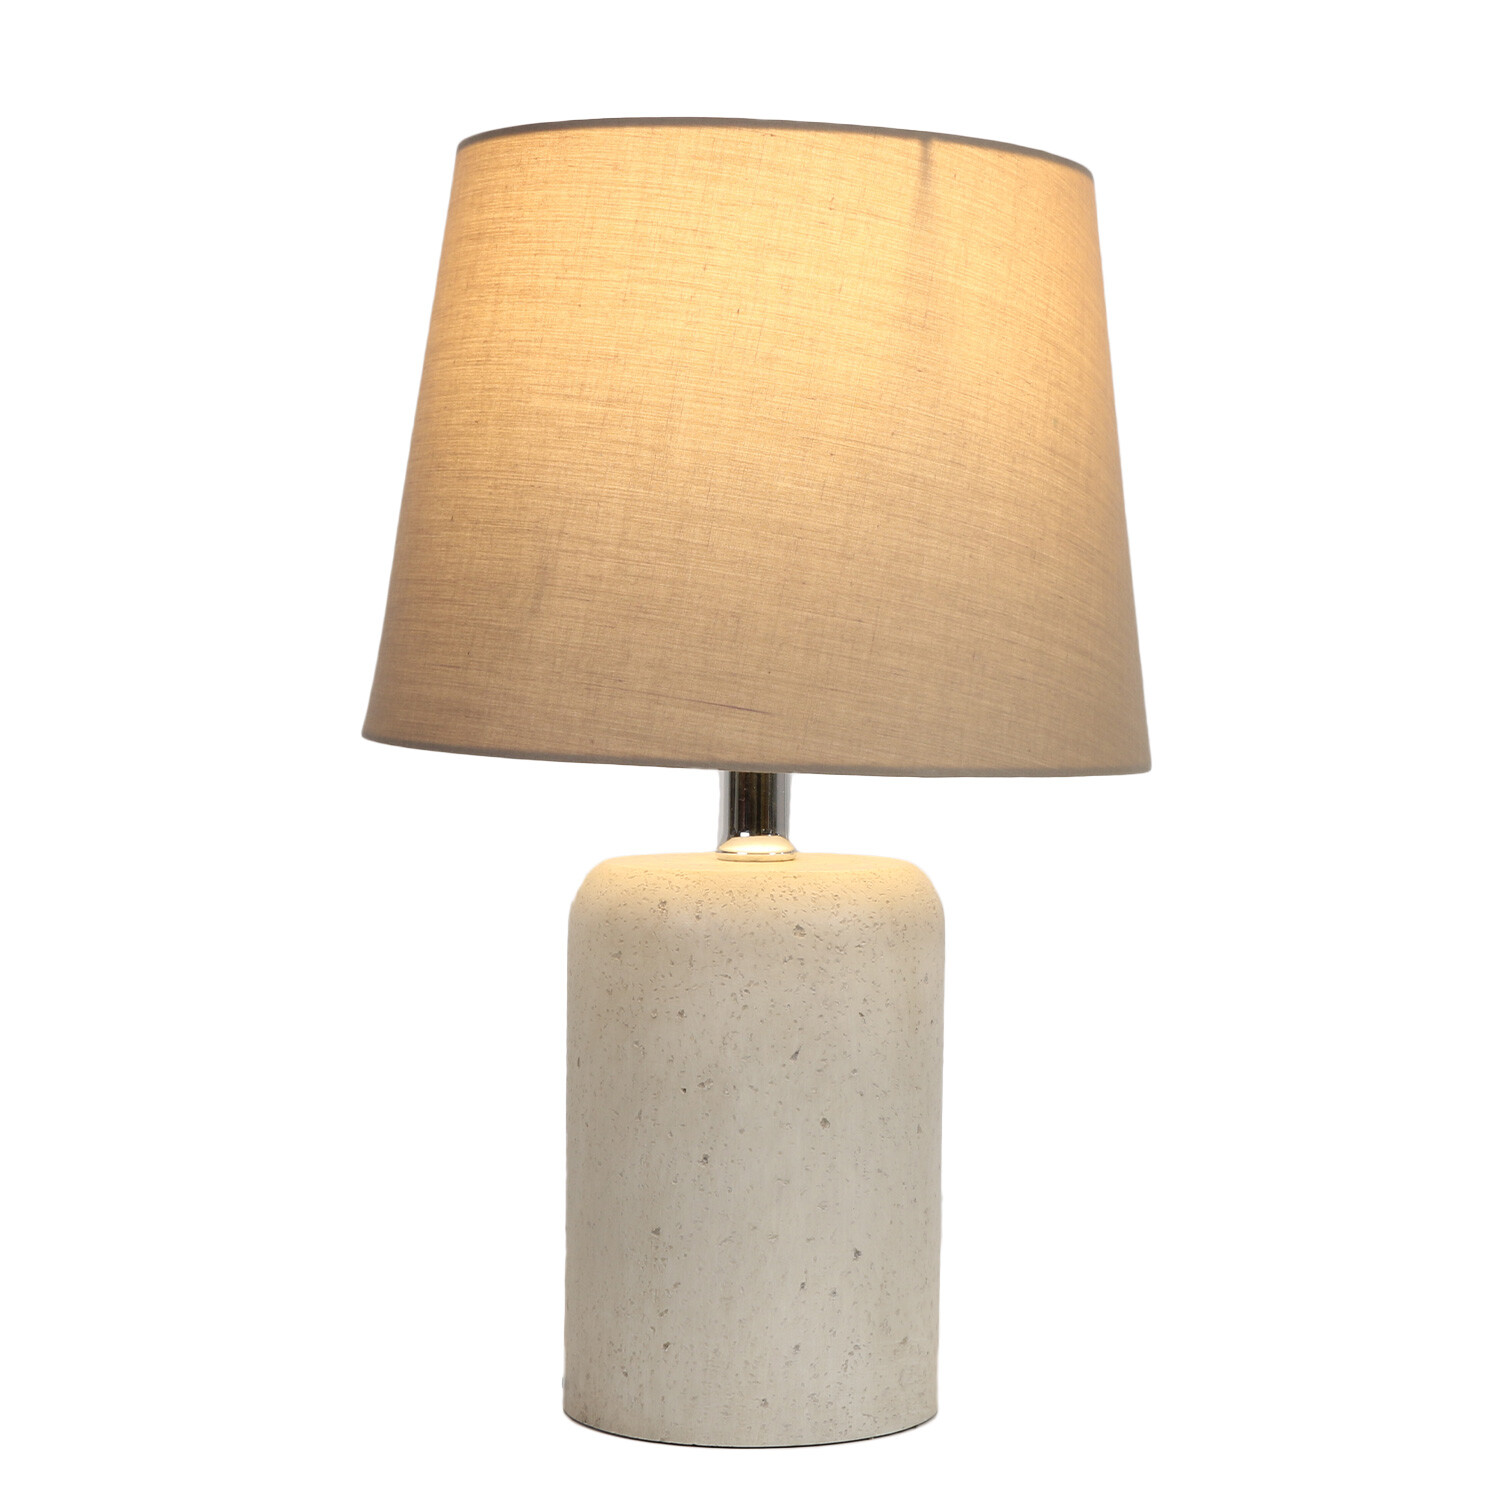 Ewan Neutral Table Lamp Image 1